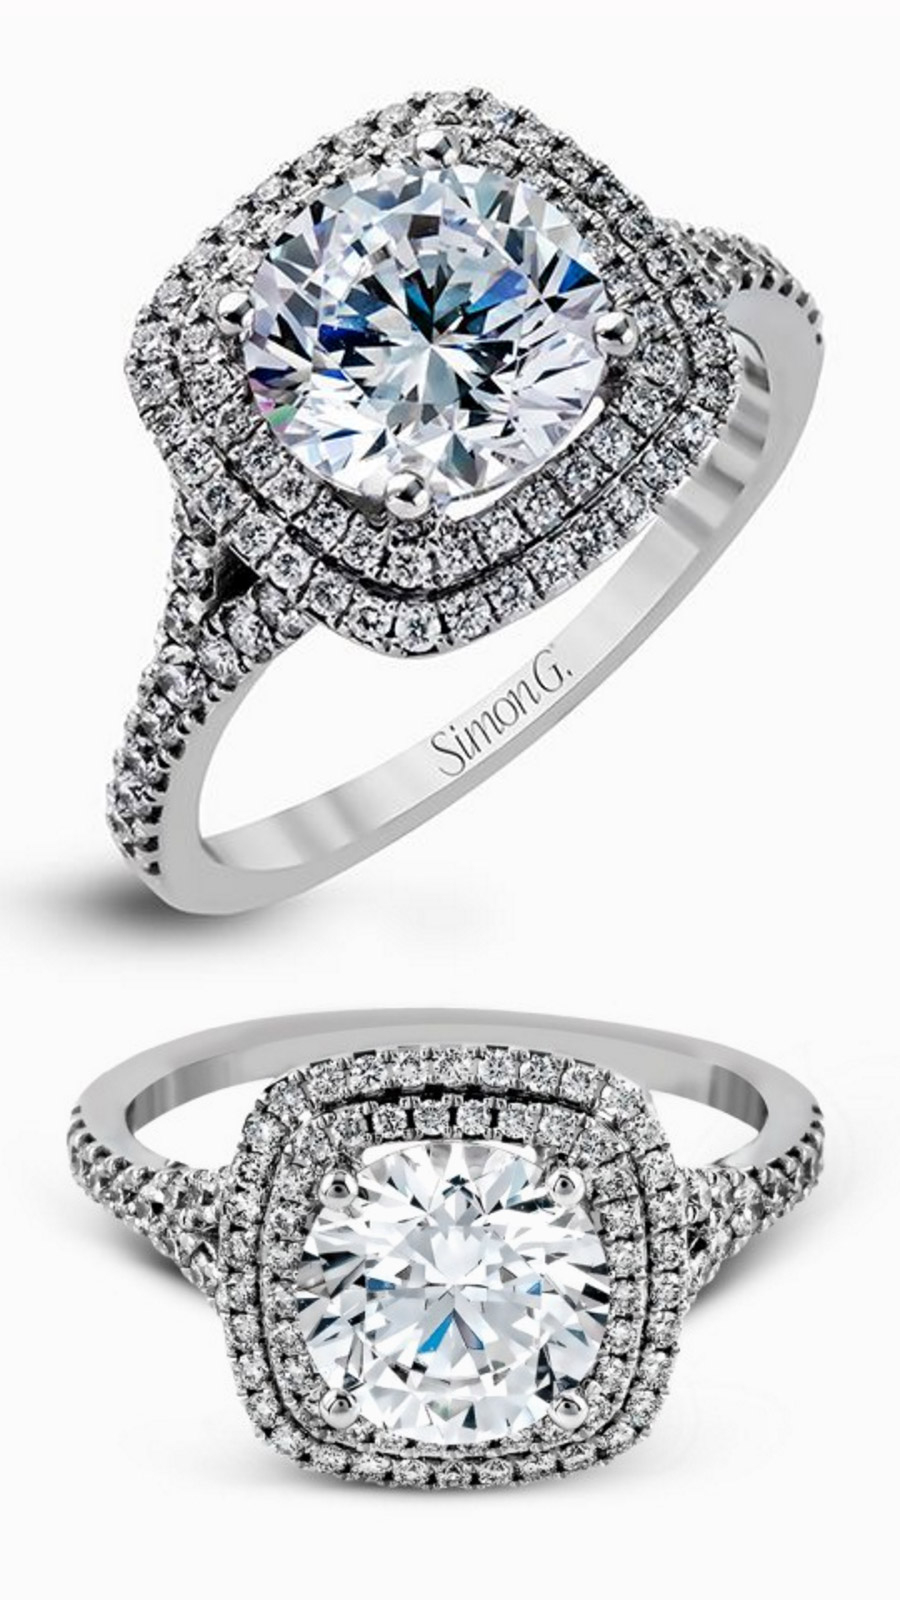 simon g gorgeous diamond engagement ring wedding band set mr2461 double halo white gold ring